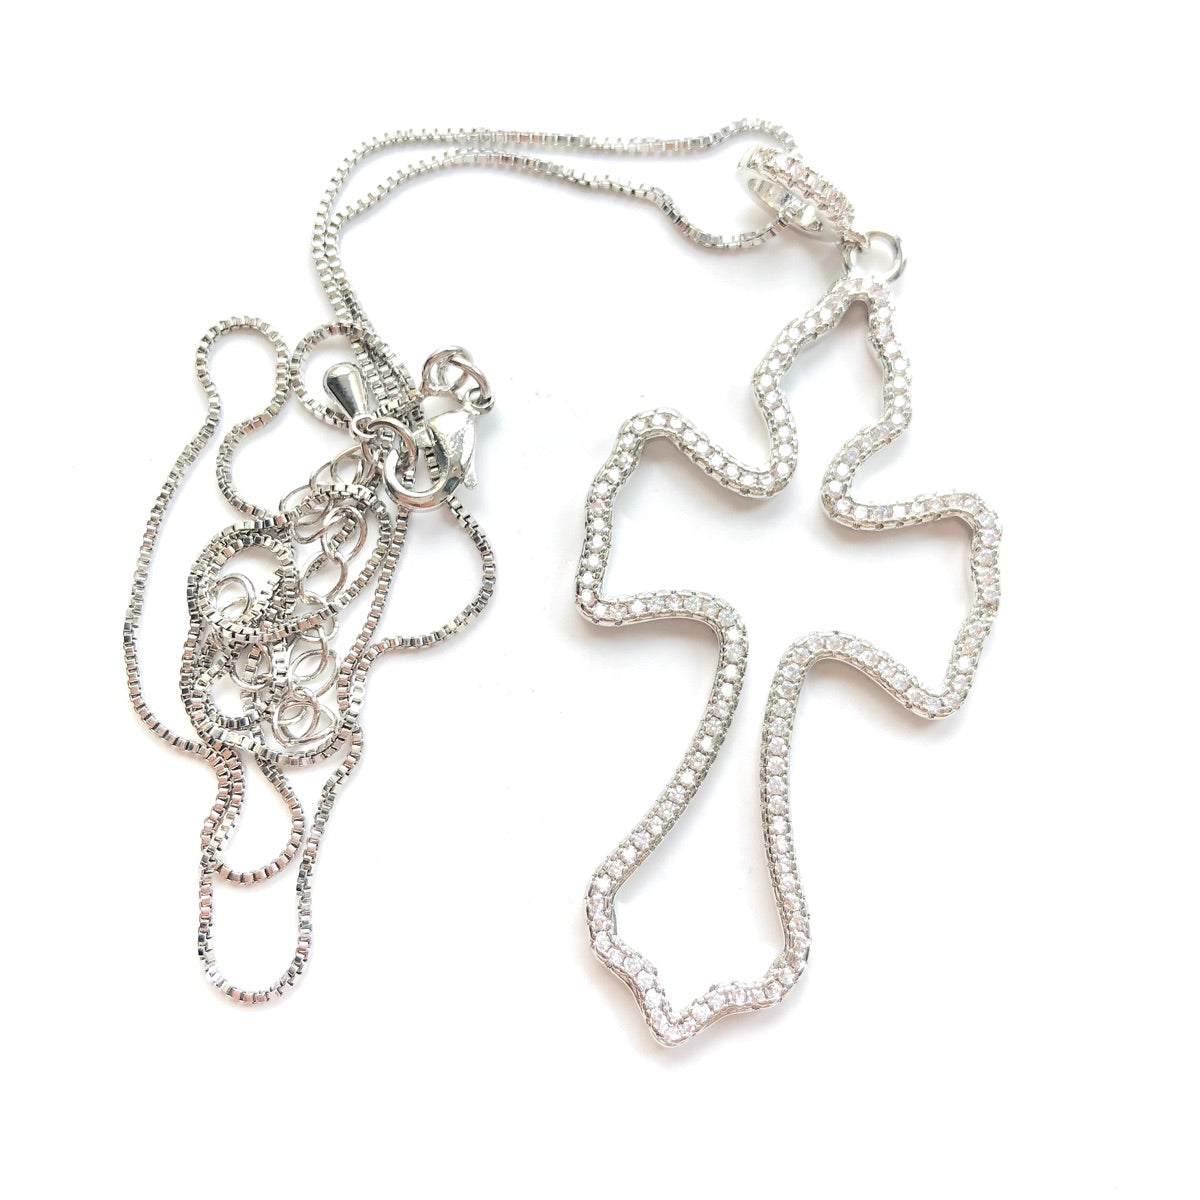 5pcs/lot CZ Paved Large Size Cross Necklaces Silver Necklaces Charms Beads Beyond